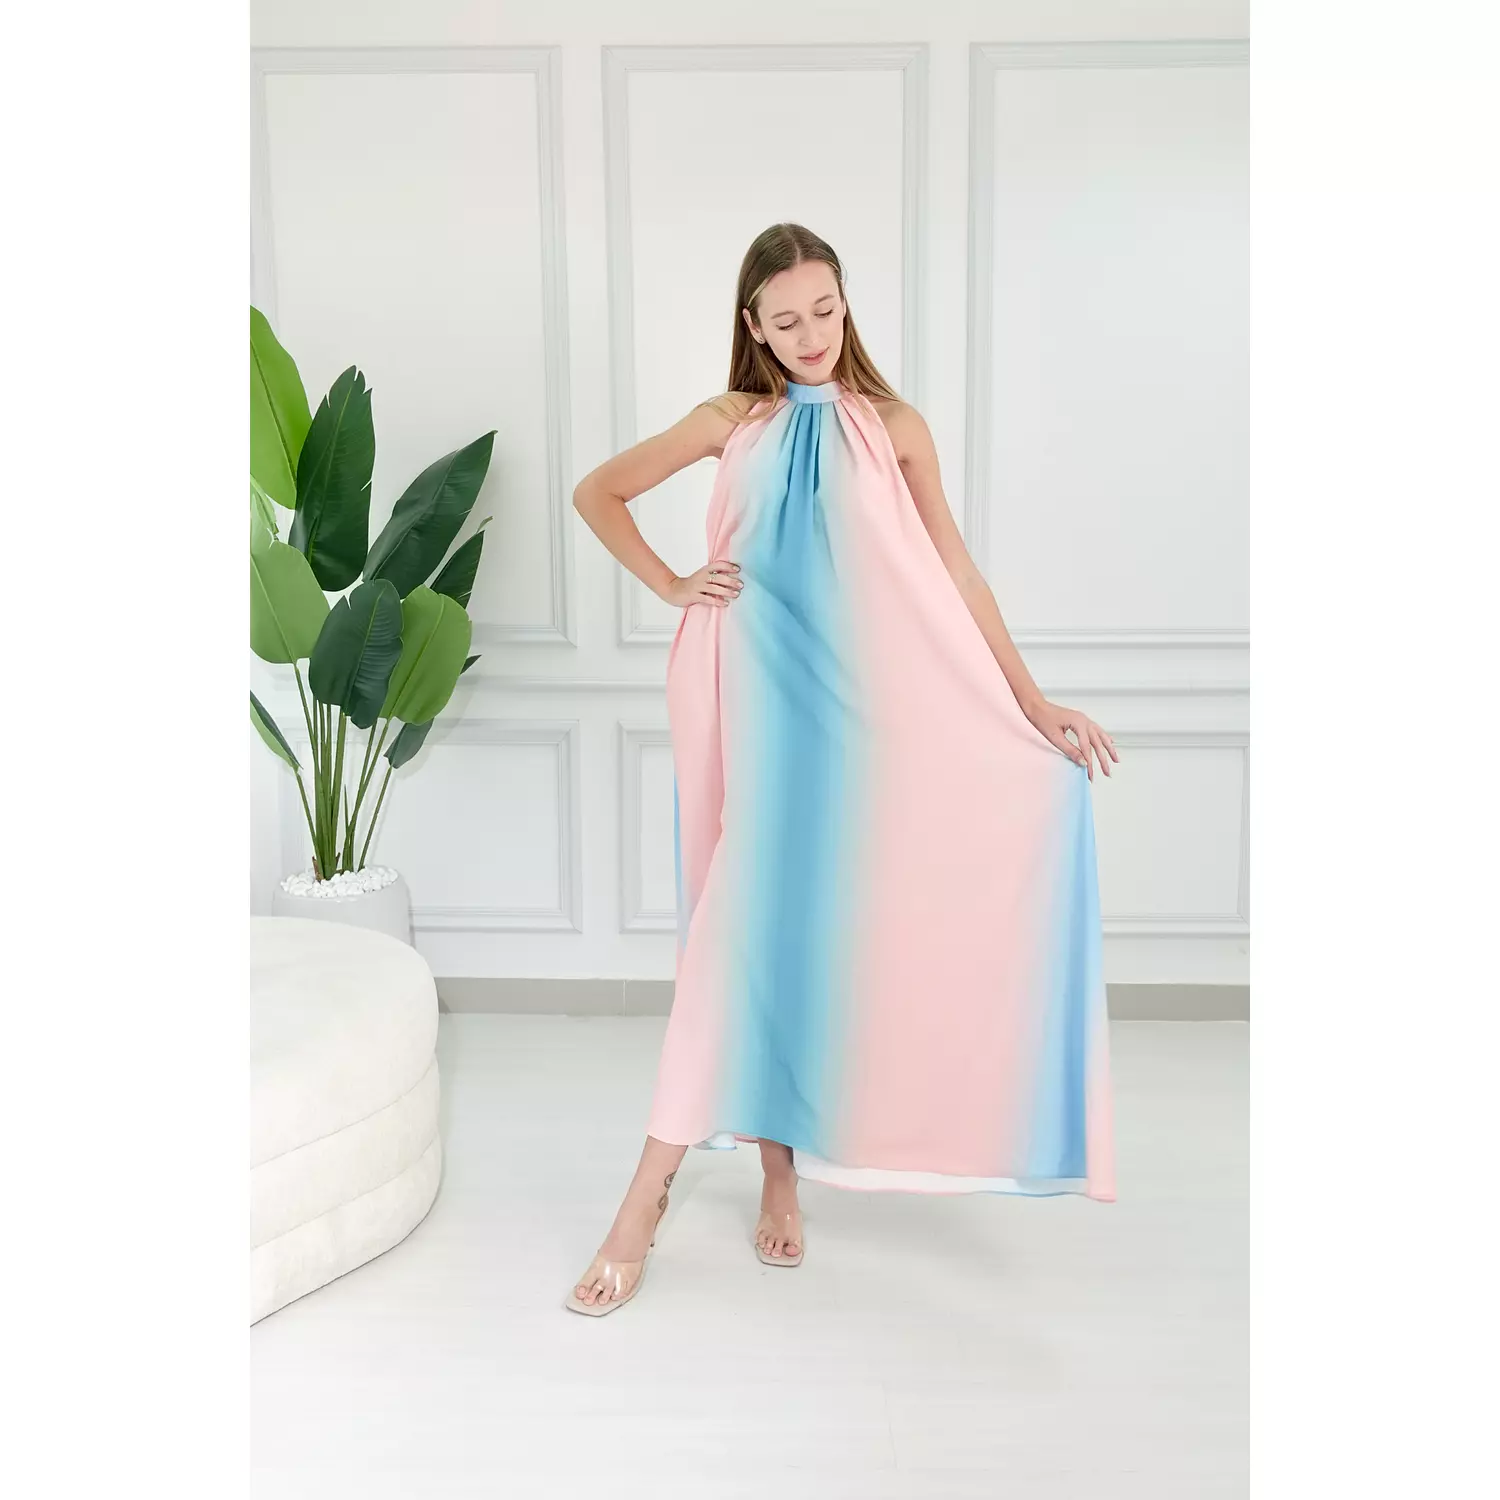 Colorful Sleeveless Dress 2